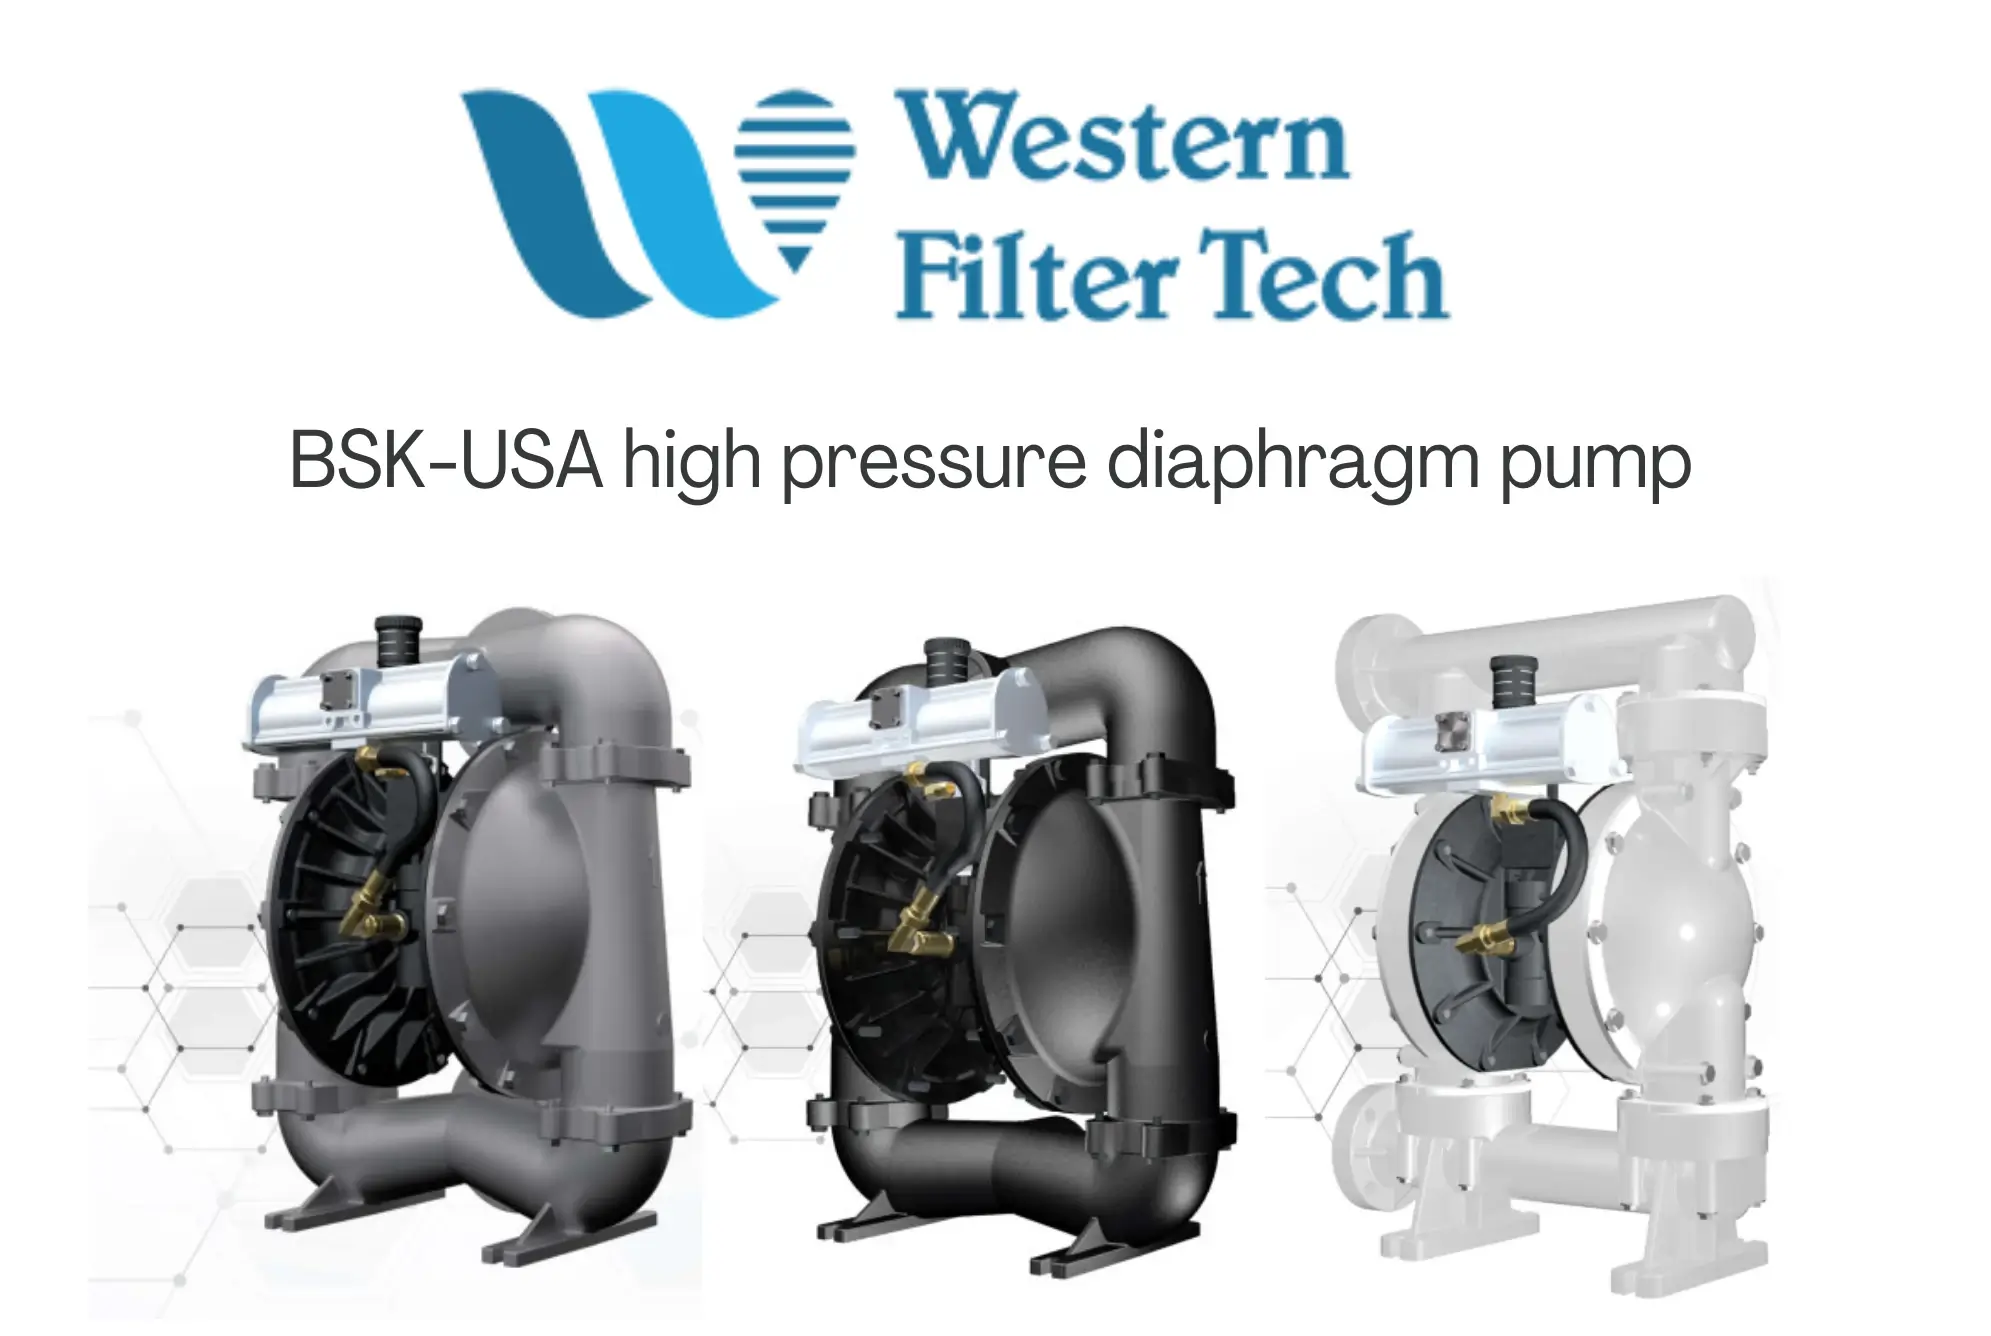 BSK high pressure diaphragm pump 2 inch Series - Western Filter Tech